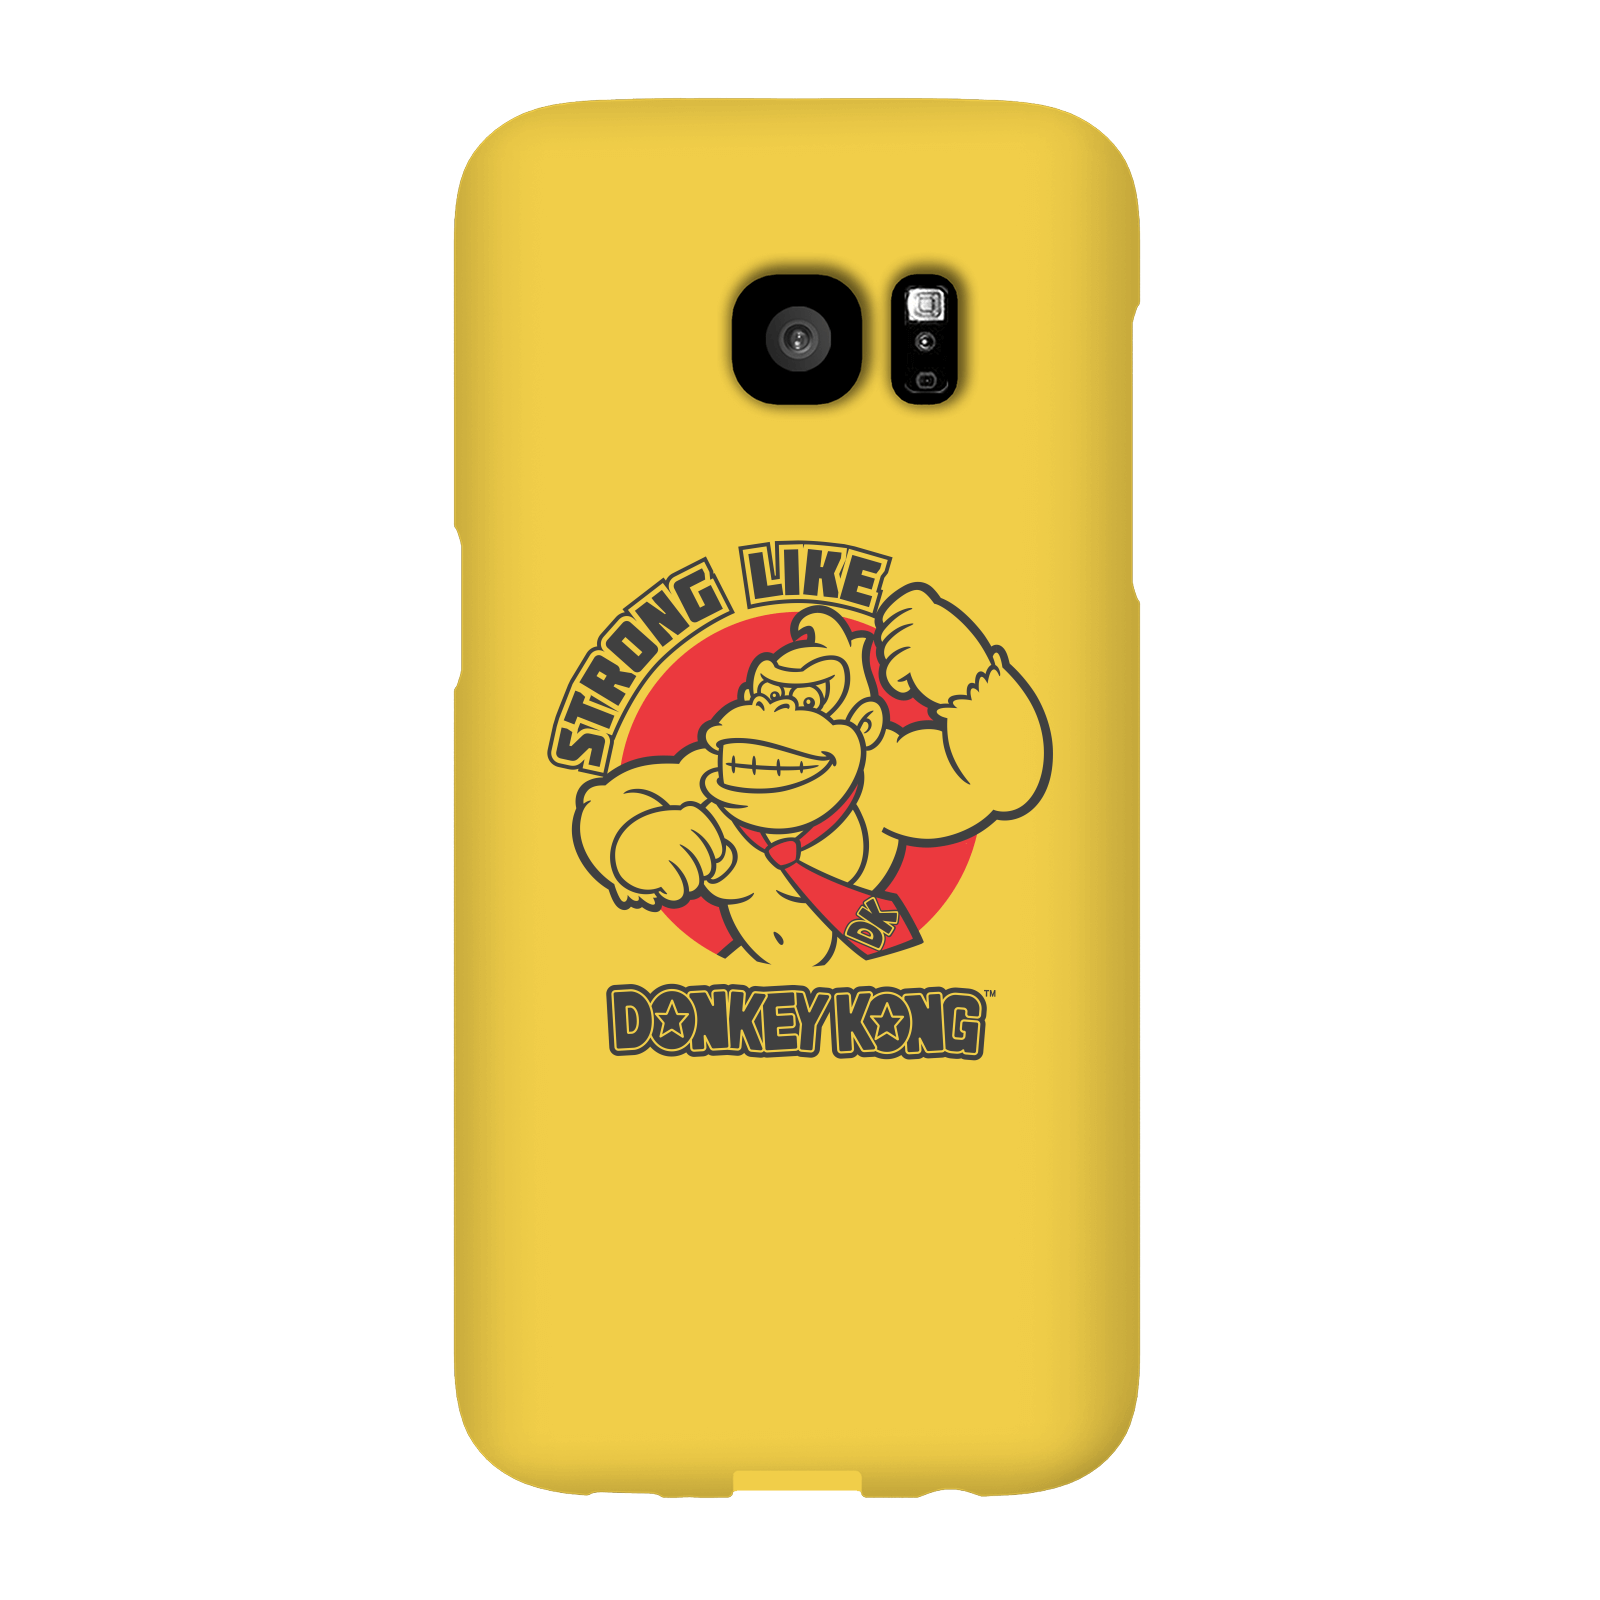 Nintendo Donkey Kong Strong Like Donkey Kong Phone Case - Samsung S7 Edge - Snap Case - Gloss